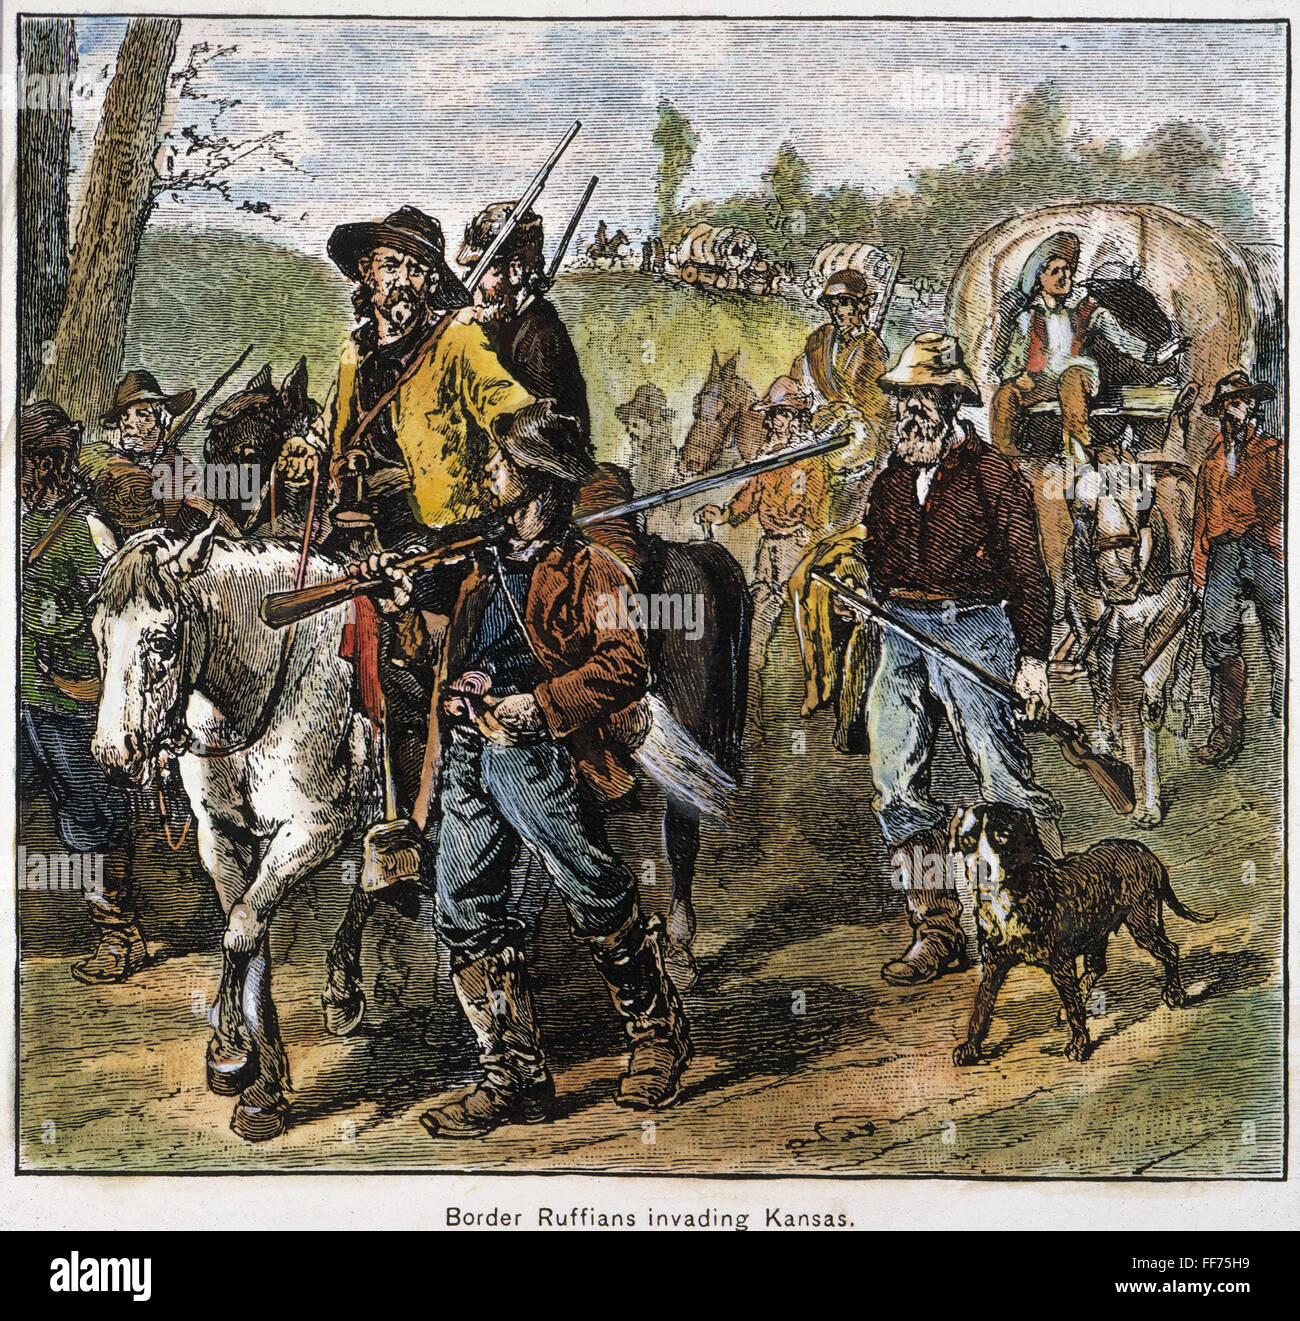 KANSAS-NEBRASKA ACT, 1856. /nMissourians on their way to plunder and burn the Free Soil capital of Lawrence, Kansas. Wood engraving, 19th century. Stock Photo